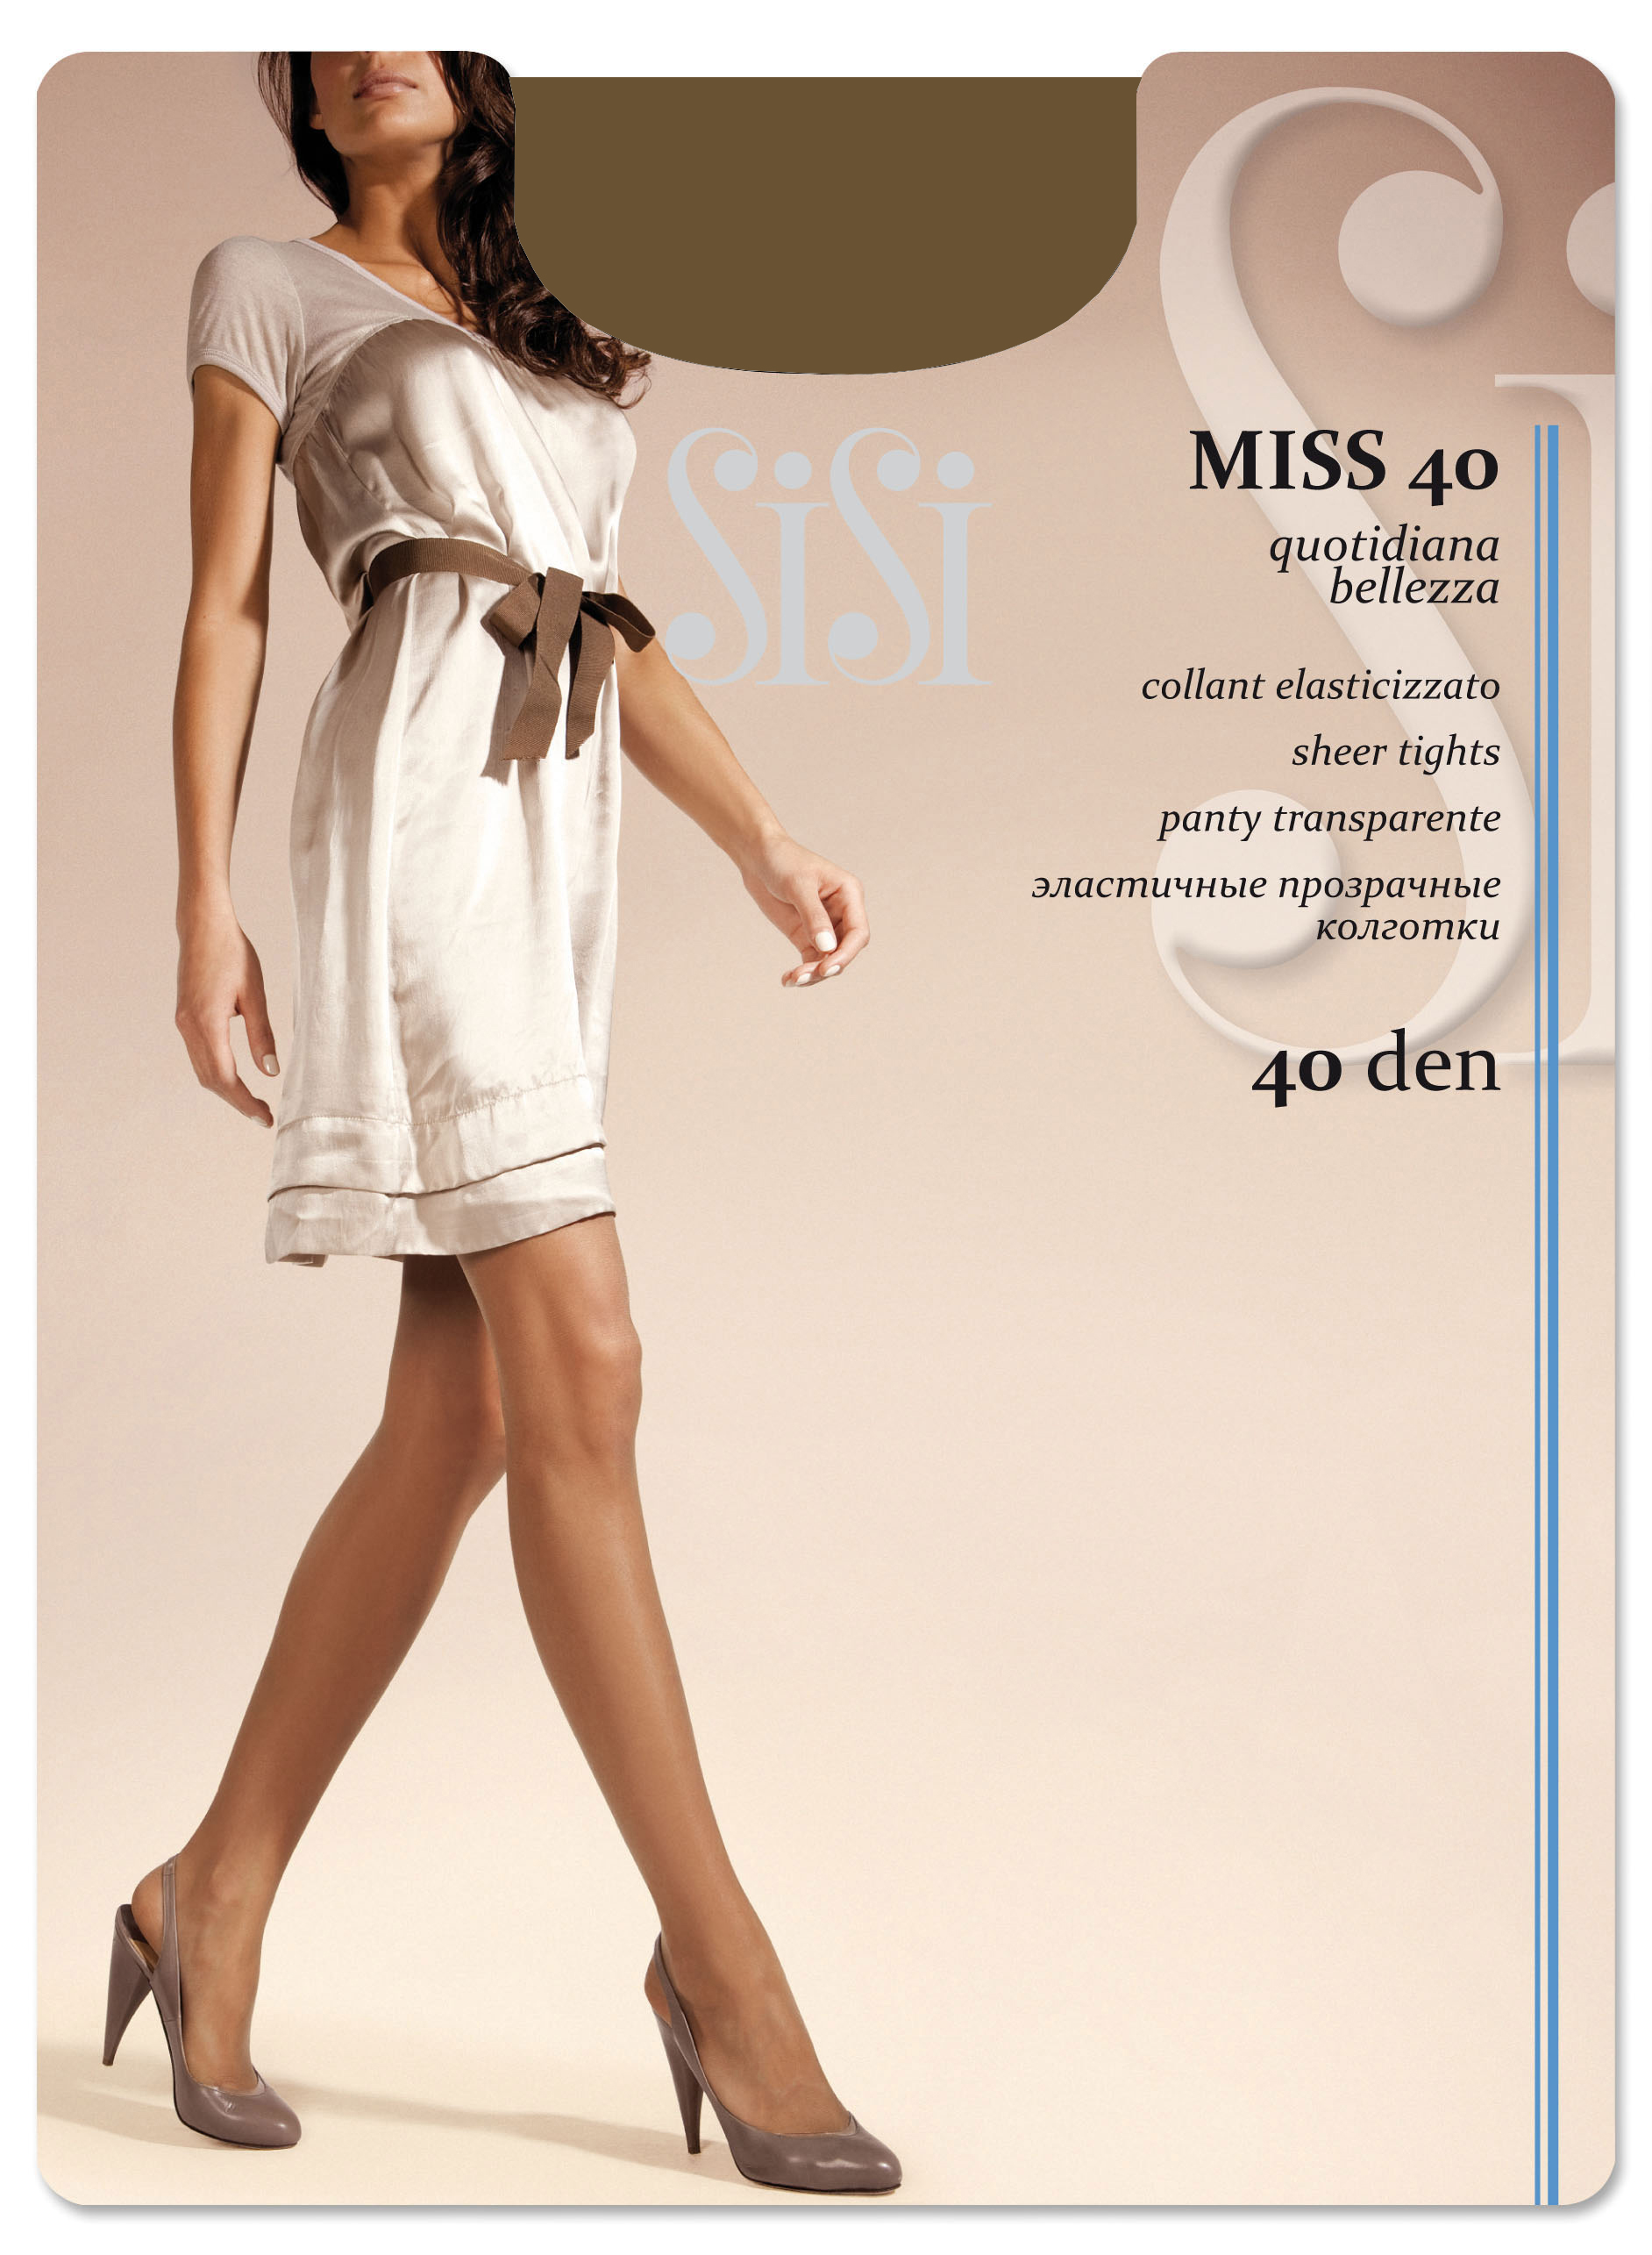 Sisi Колготки Miss 40 Daino 4